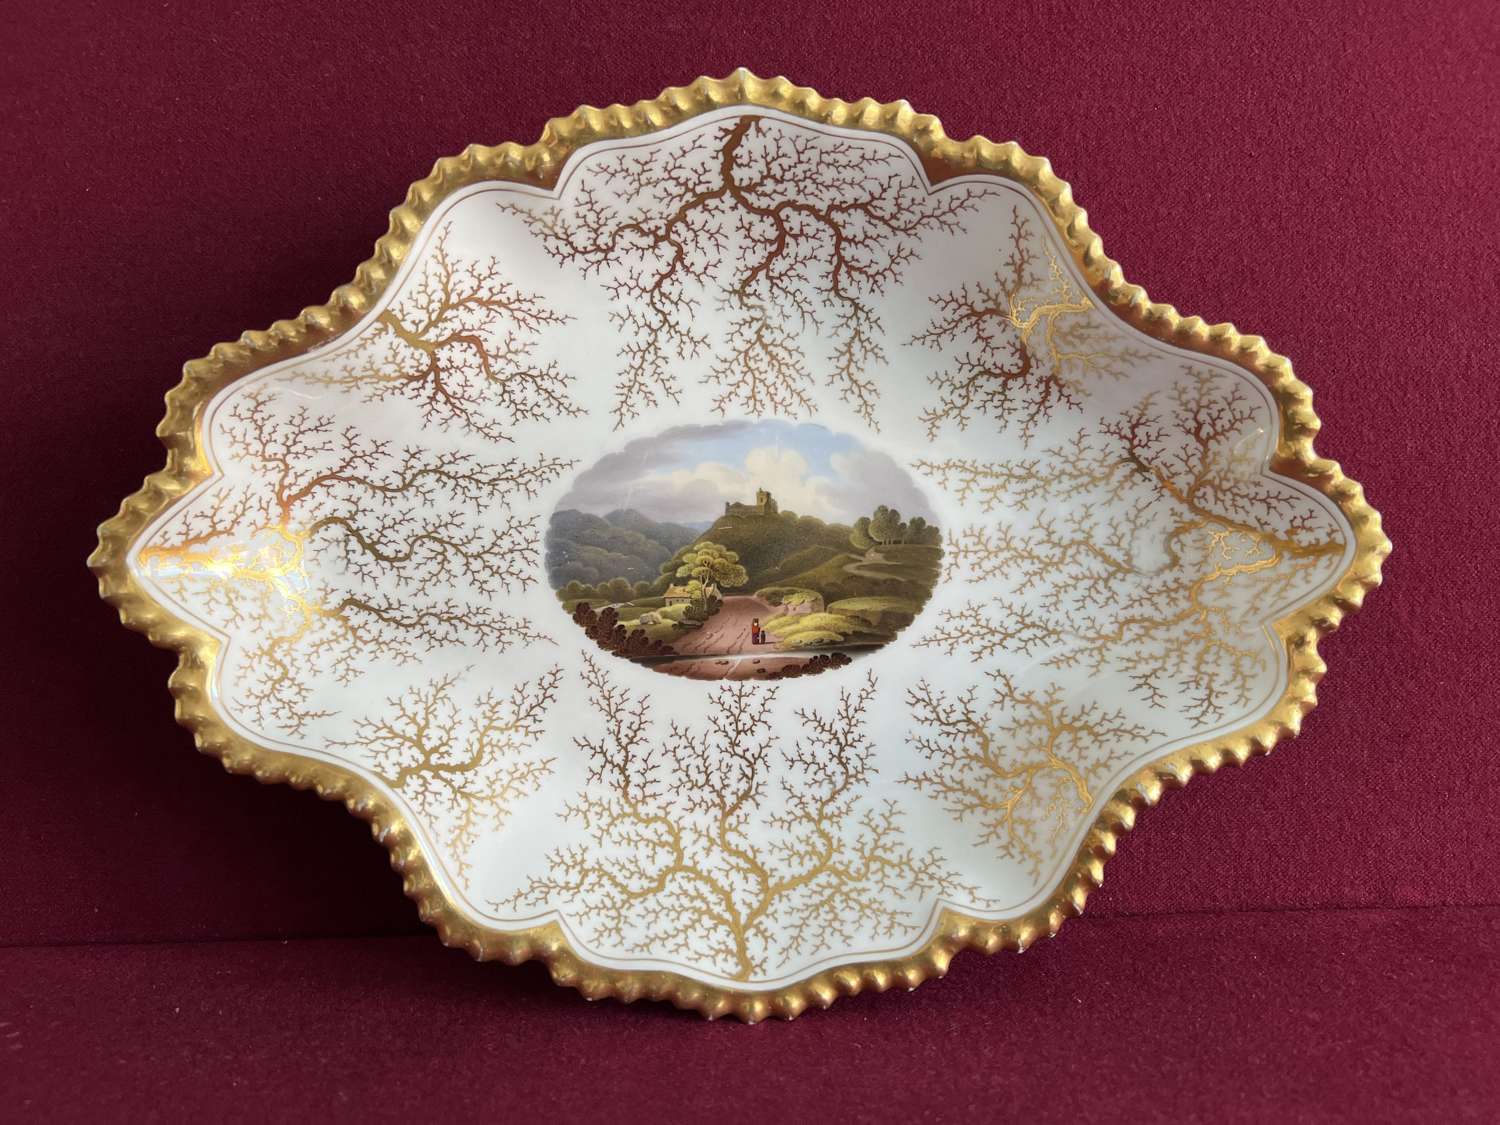 A Flight, Barr and Barr Worcester Porcelain Dessert Dish c.1820